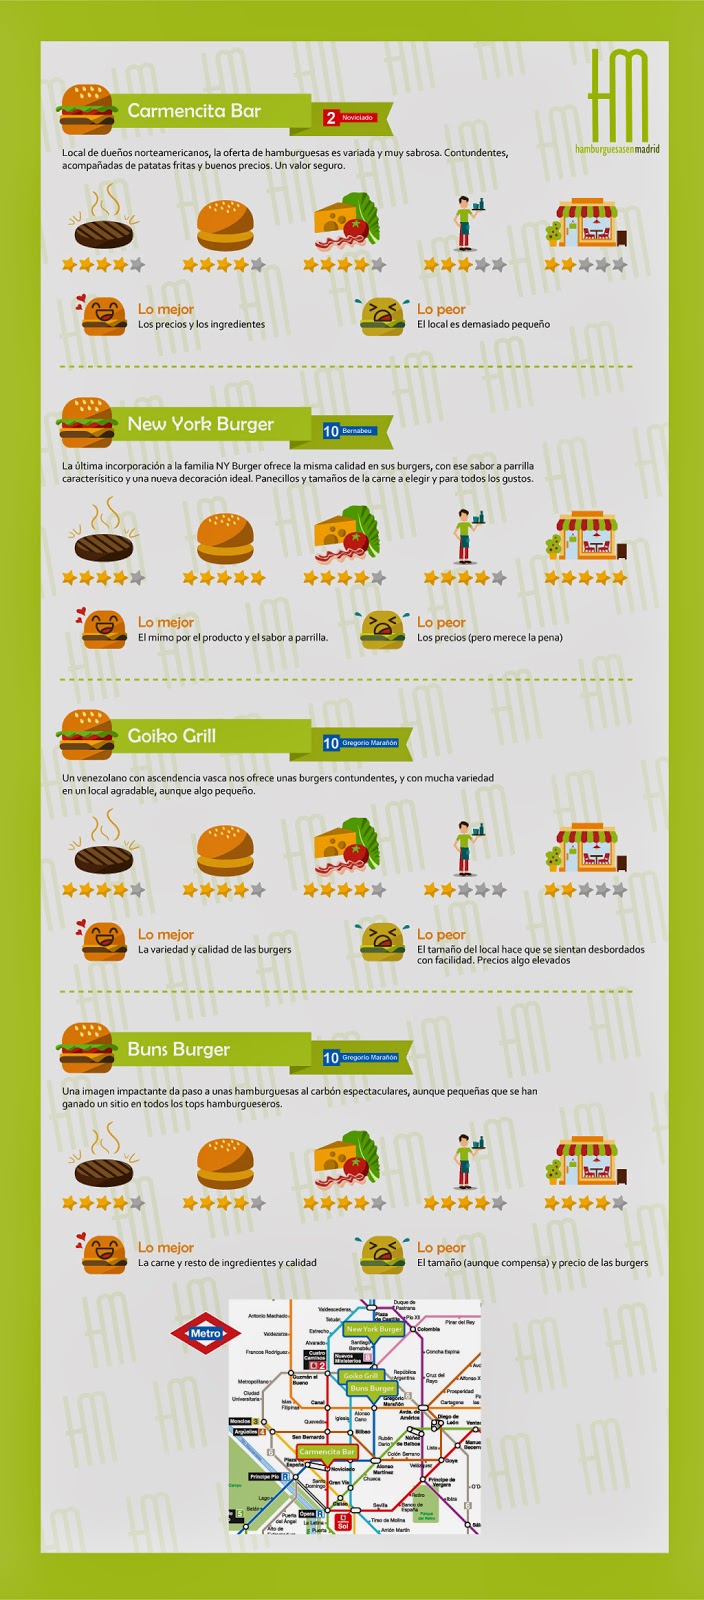 Infografia Metro a Metro hamburguesero